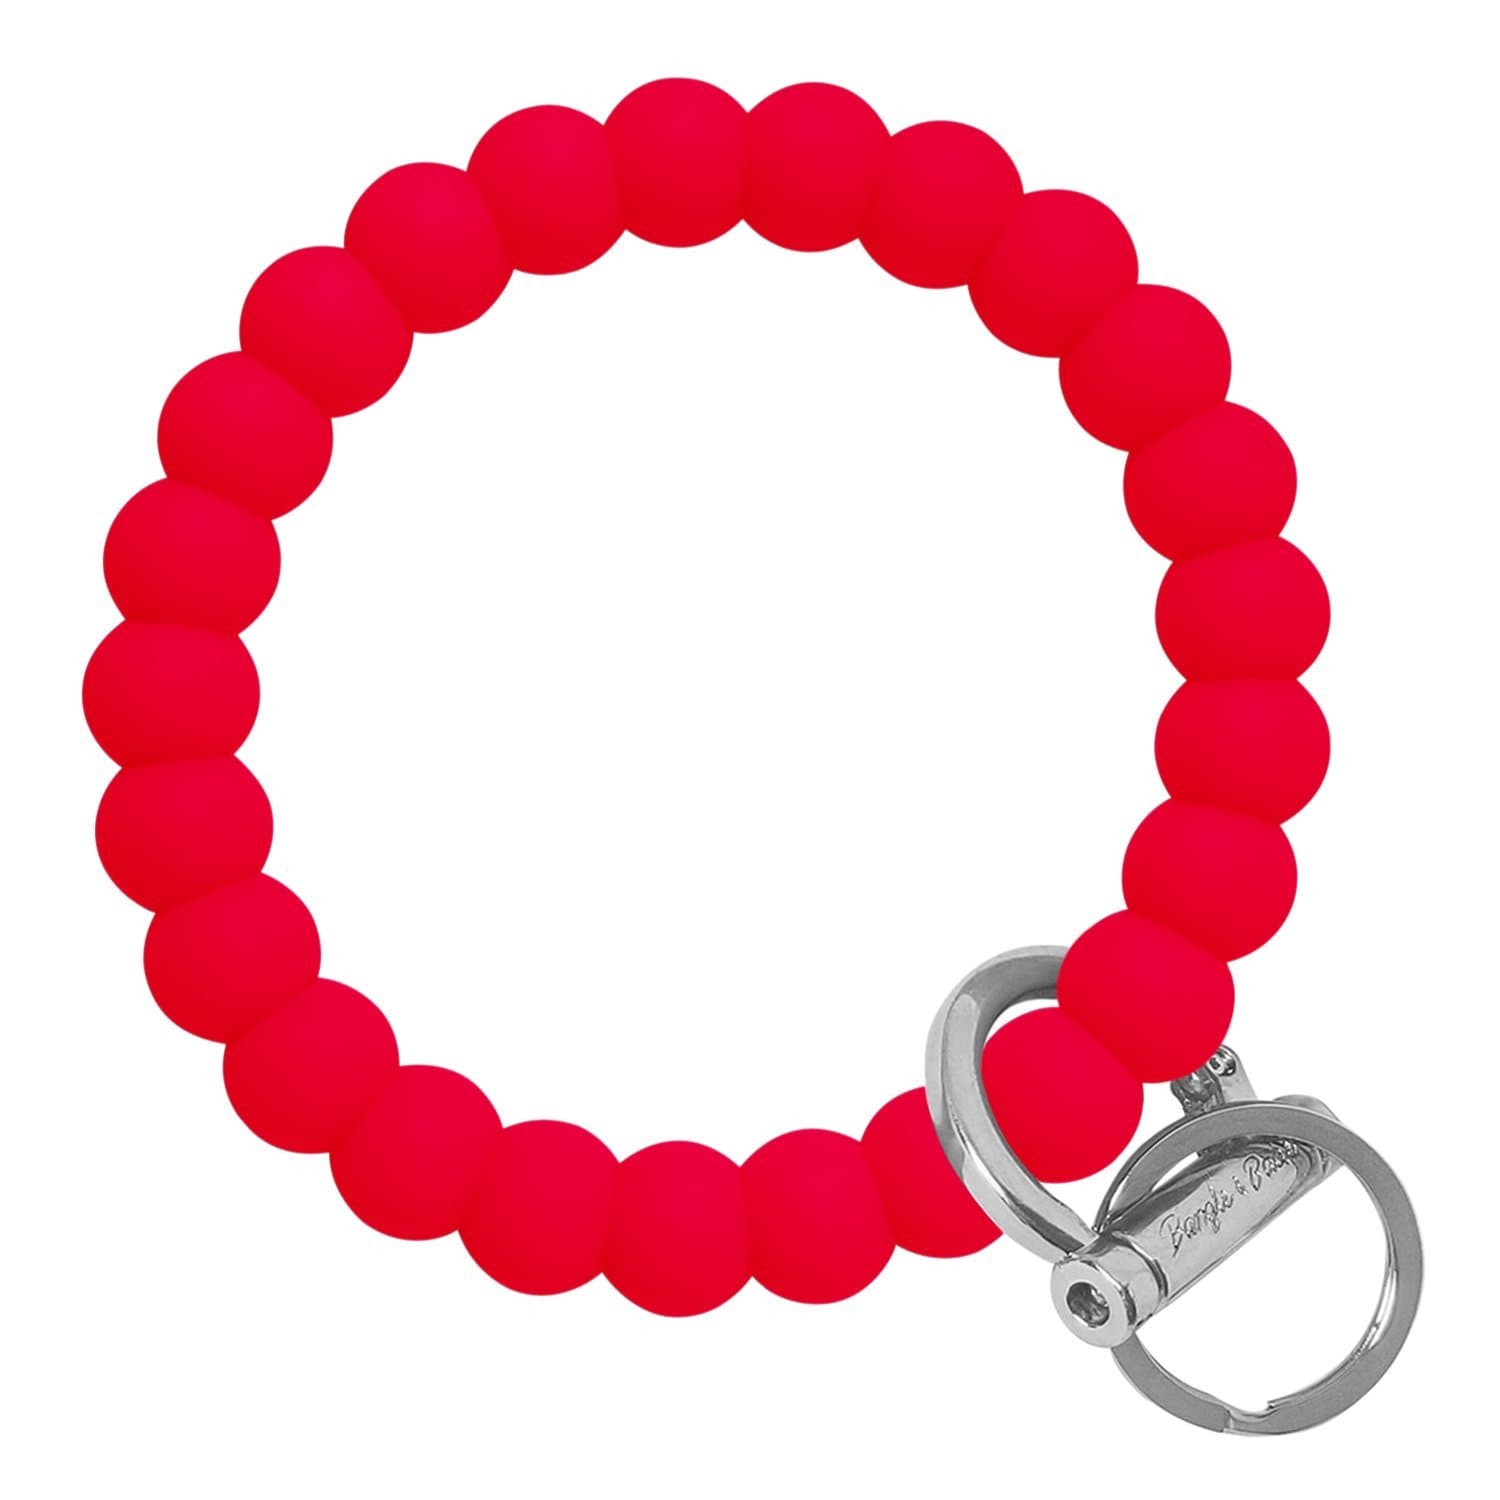 key ring bracelet